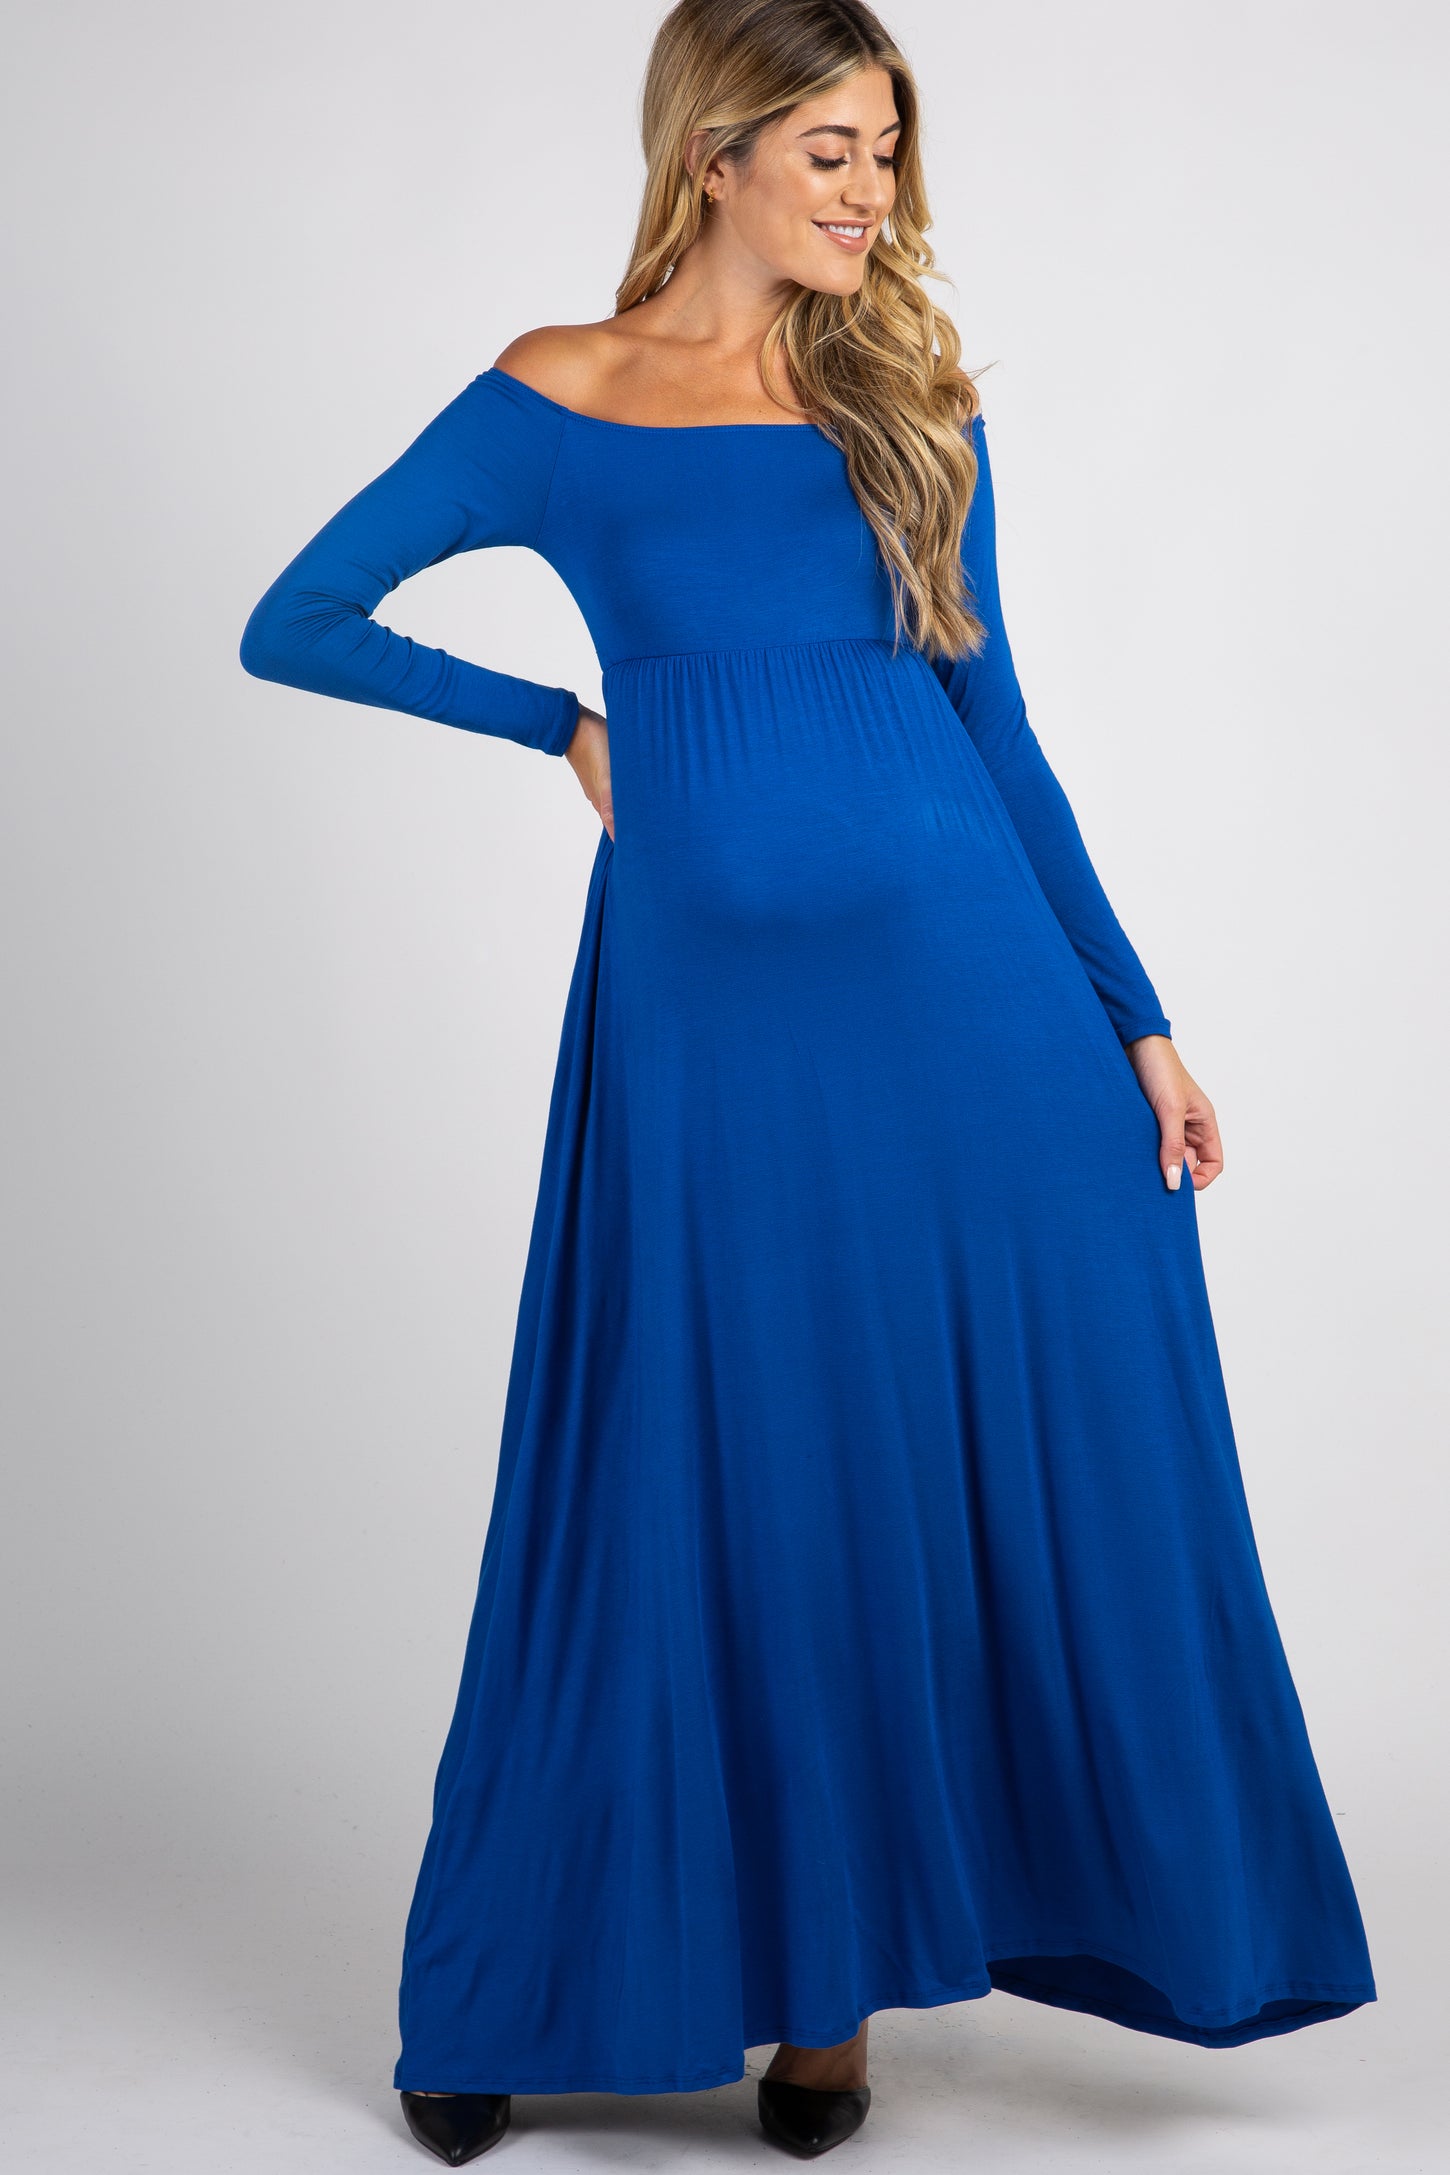 Petite Royal Blue Solid Off Shoulder Maternity Maxi Dress